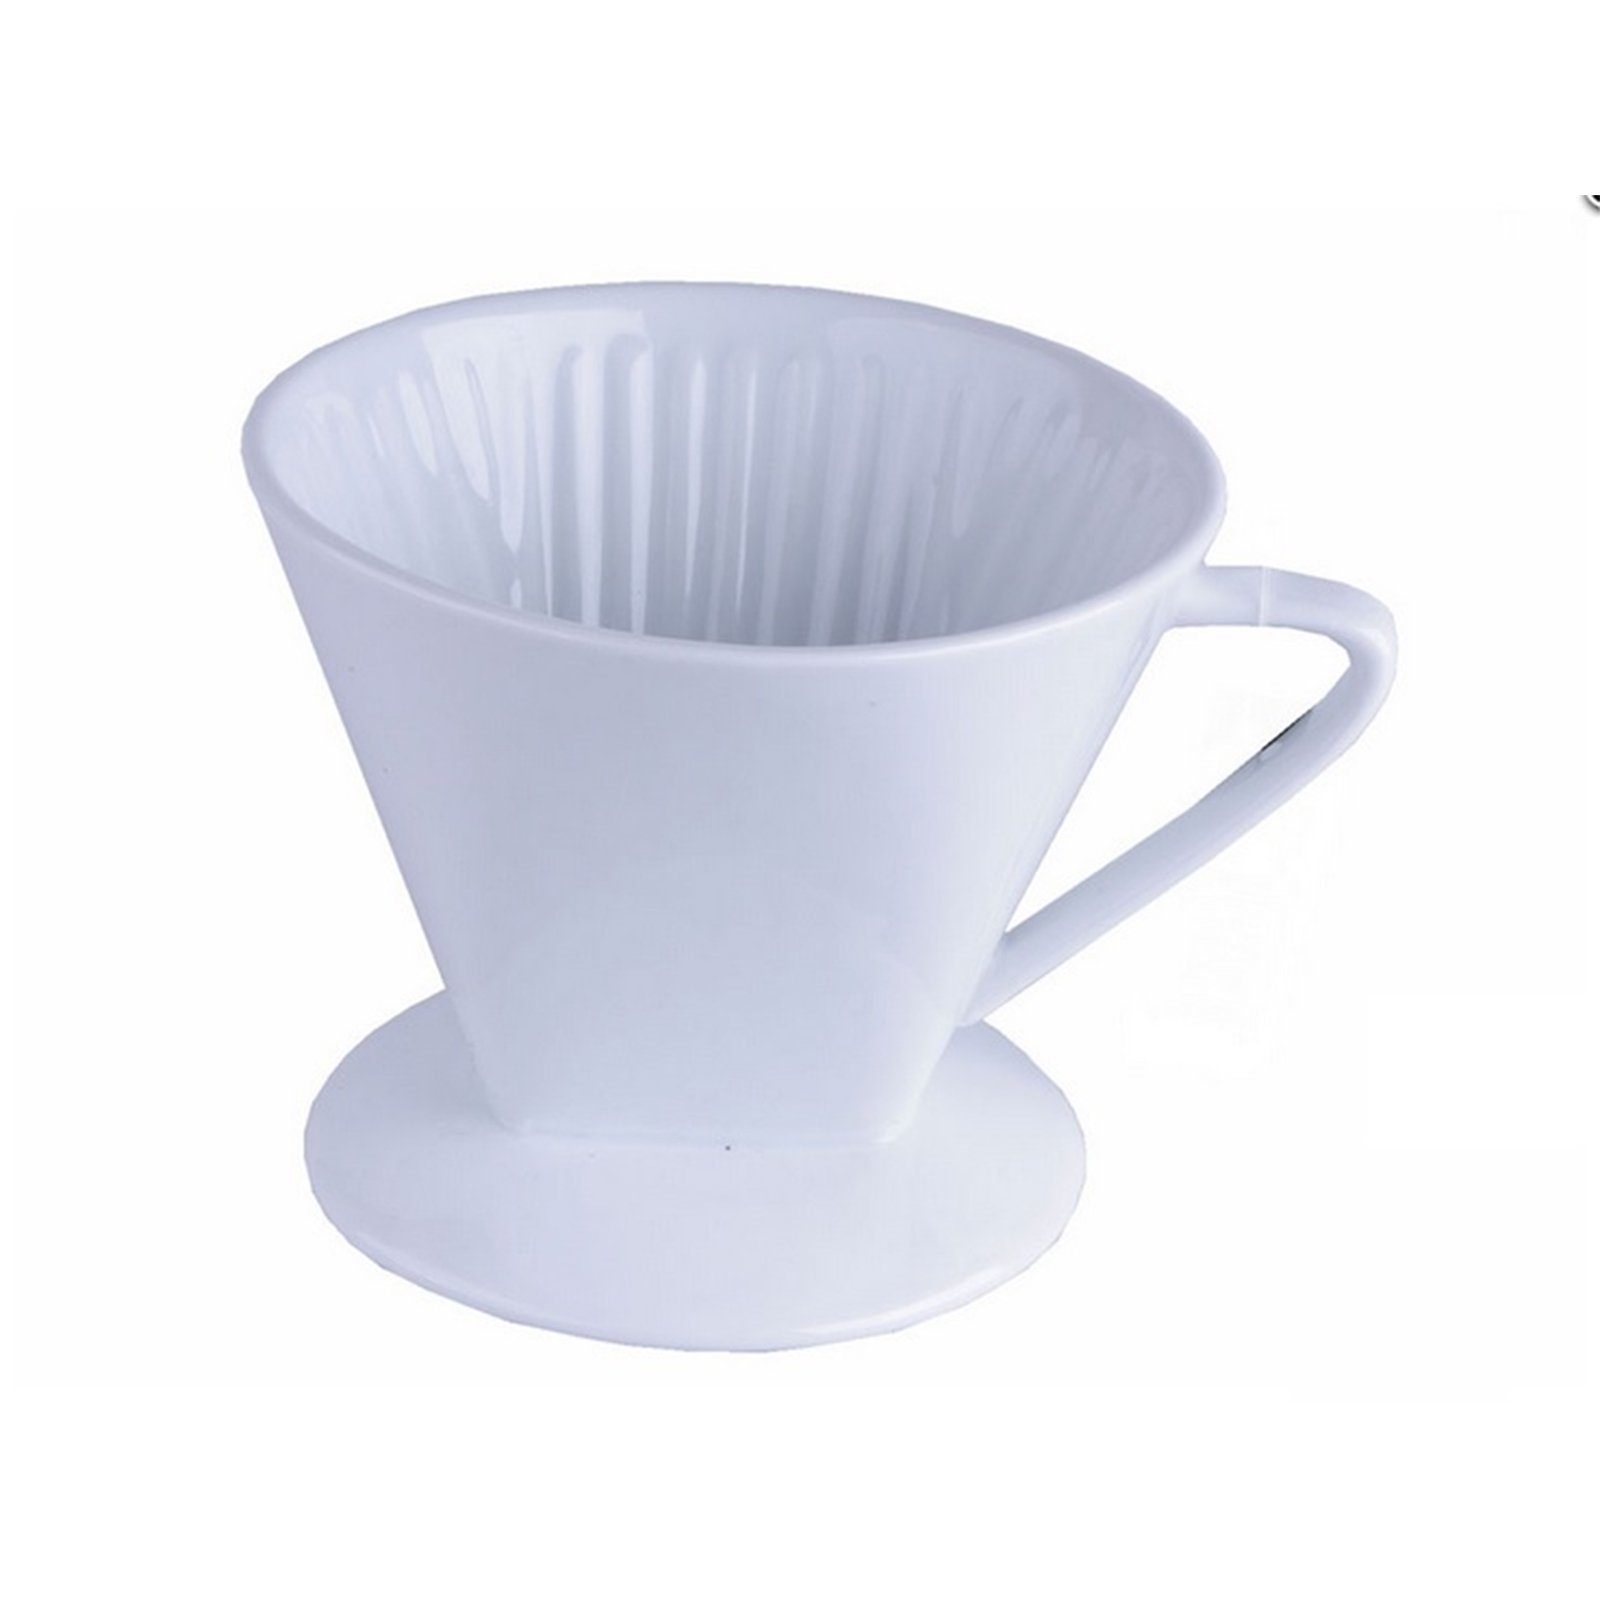 Kaffeefilter Porzellan Weiß, Neuetischkultur aus Permanentfilter Porzellan